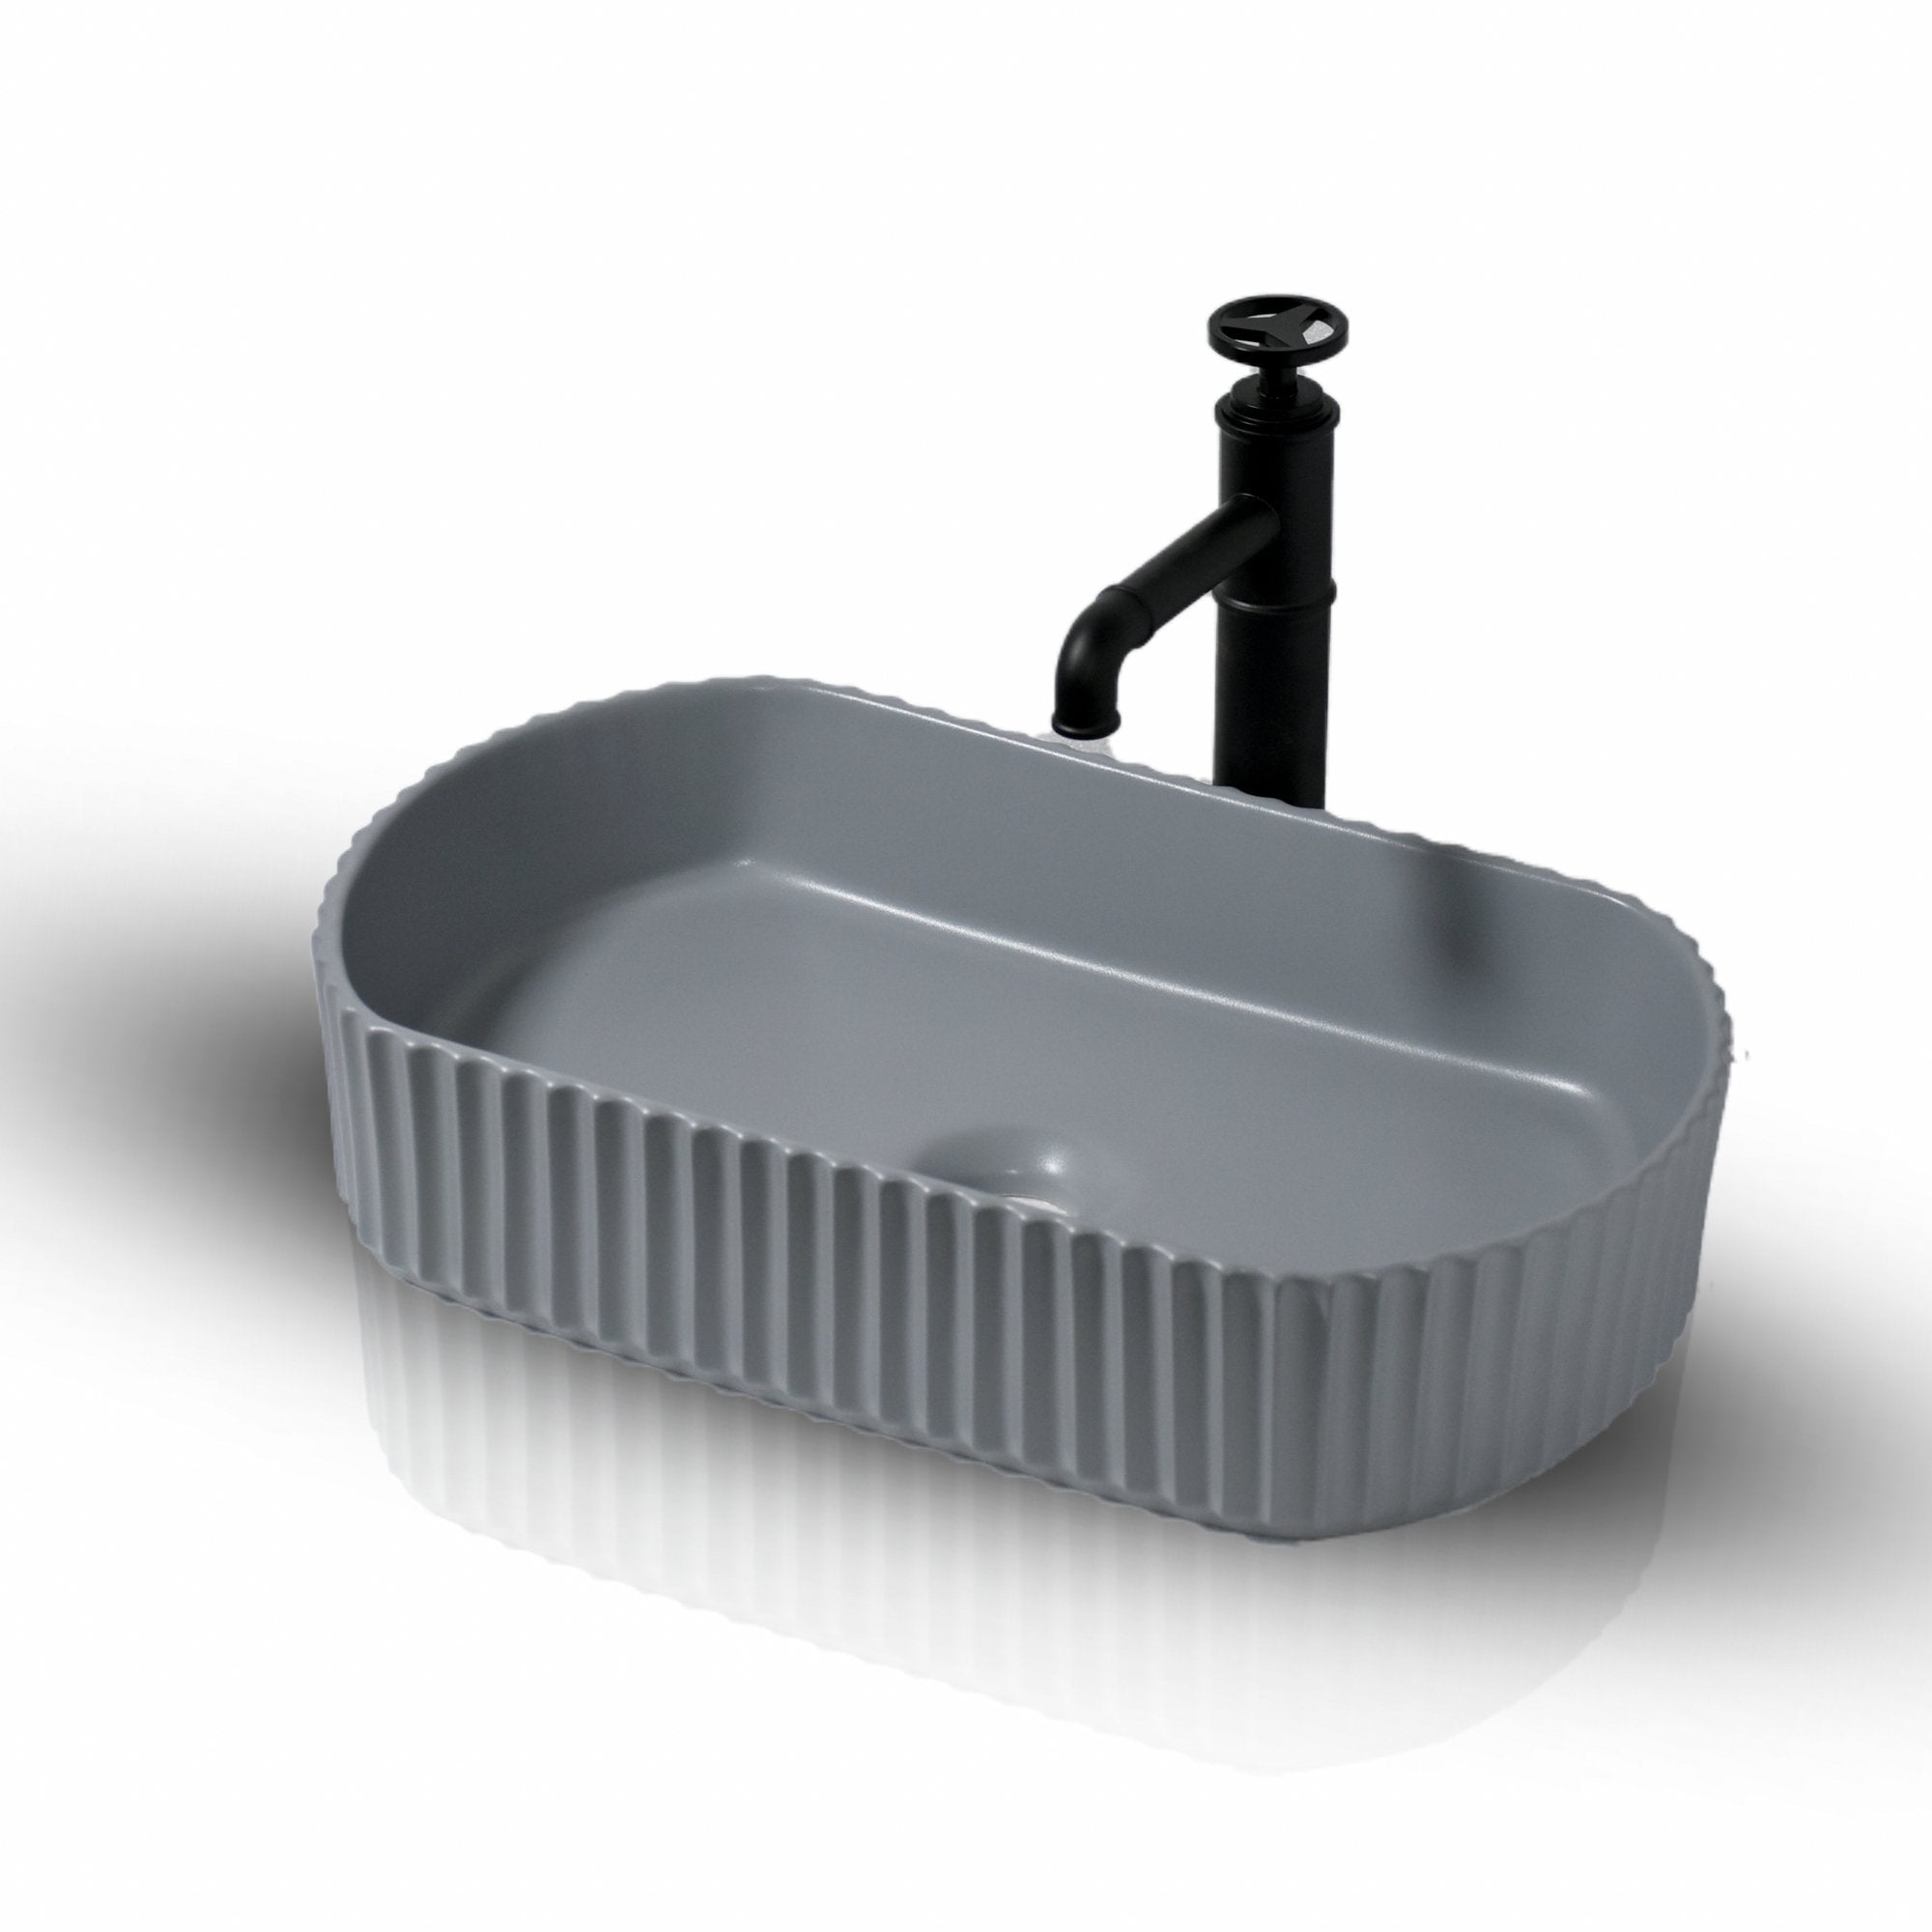 InArt Oval Bathroom Ceramic Vessel Sink Art Basin in Grey Matte Color - InArt-Studio-USA